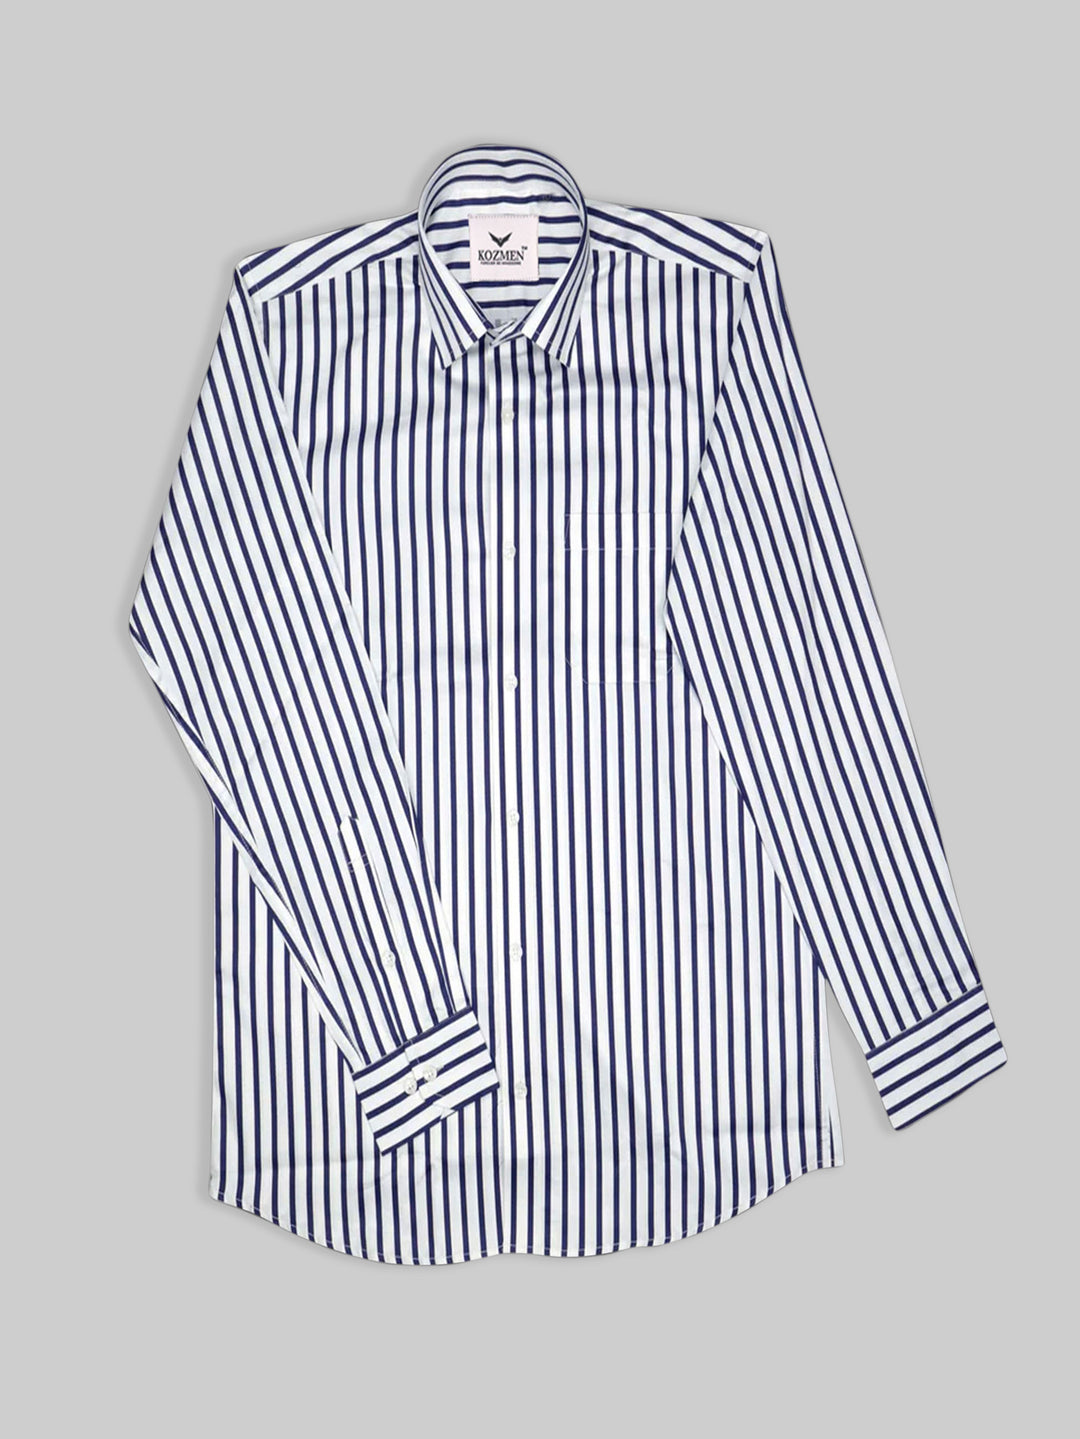 Burst Blue with white soft cotton Premiuim stripe shirt